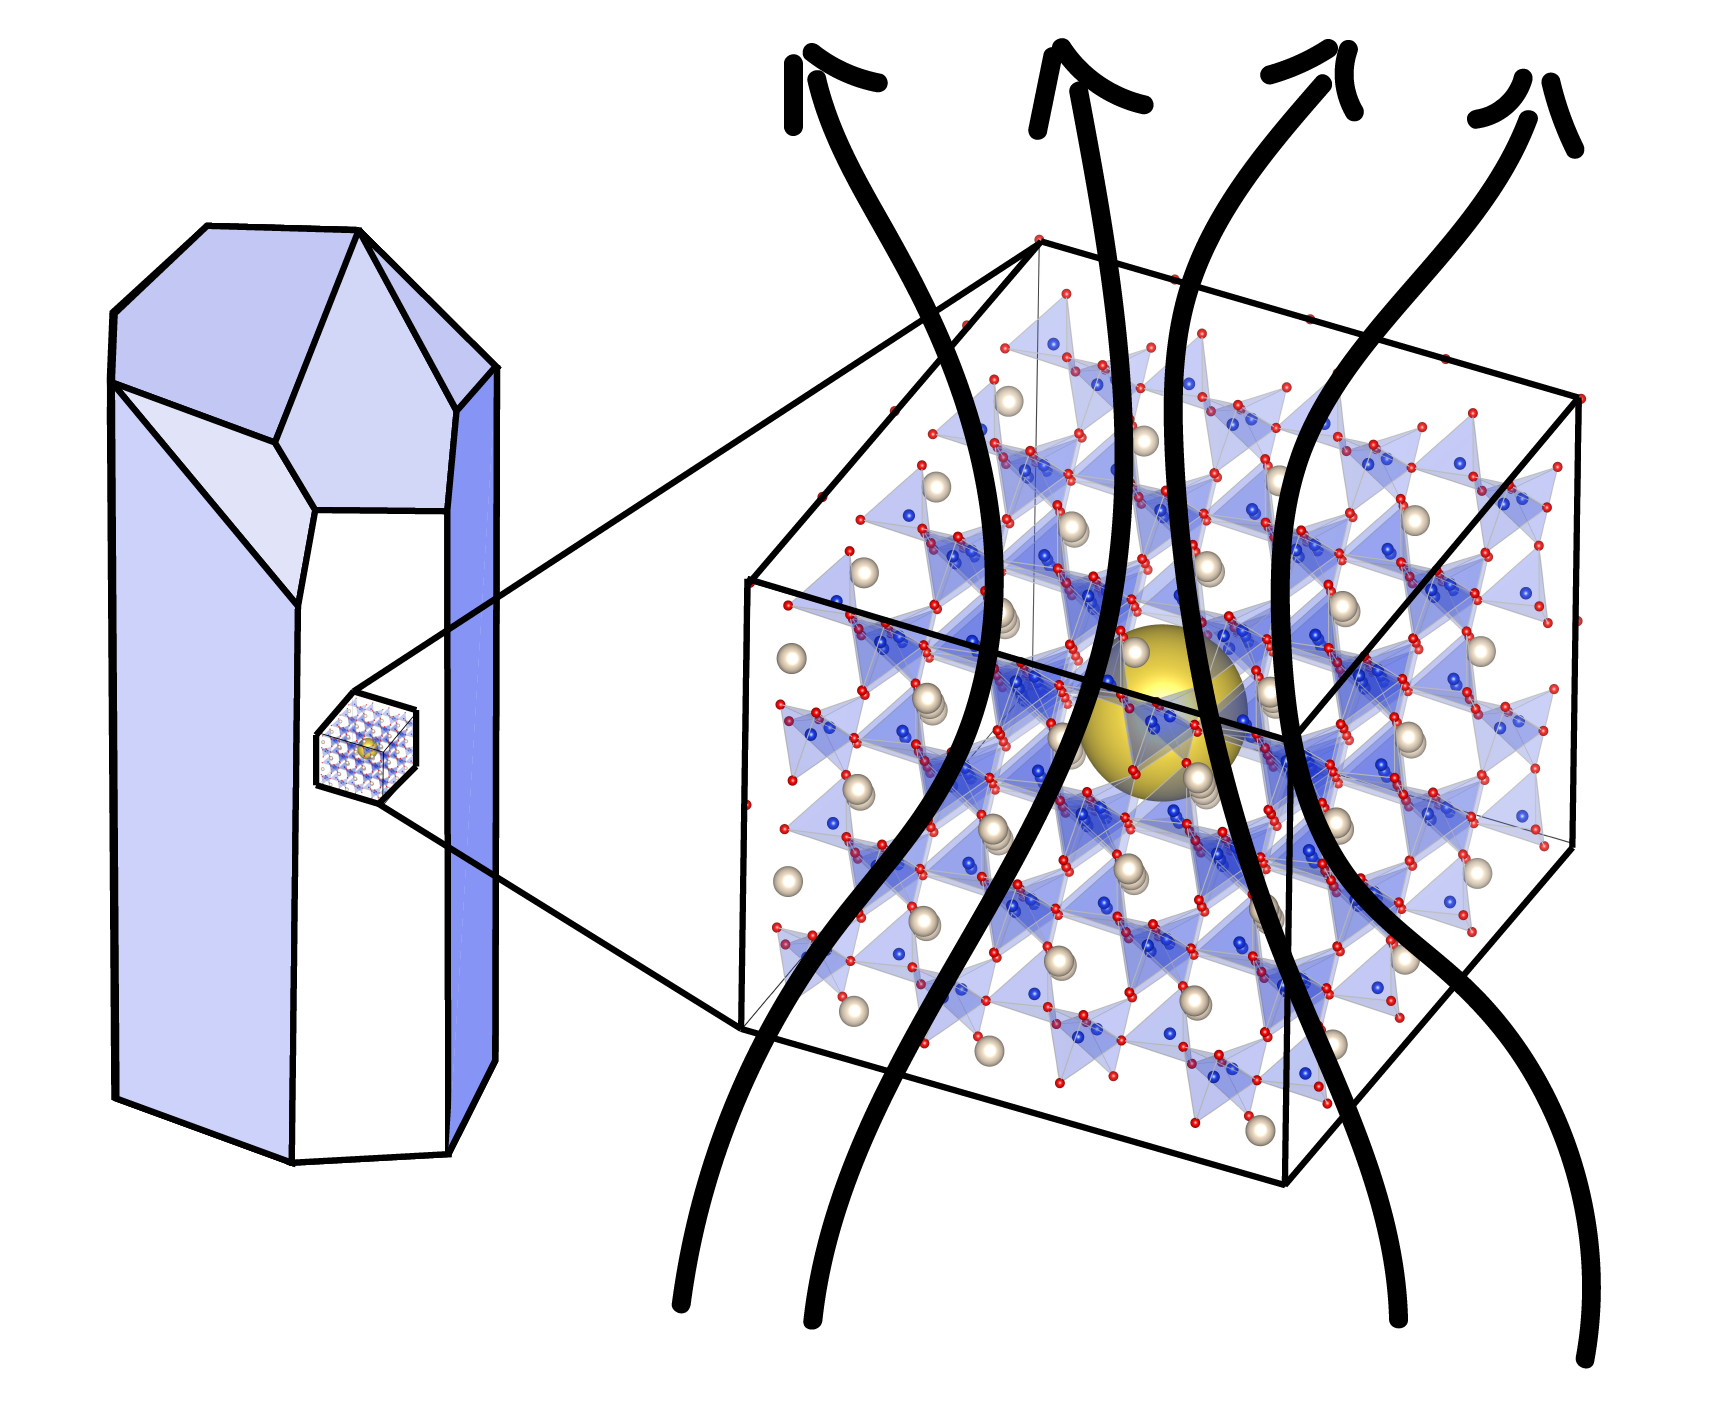 Nanopore image